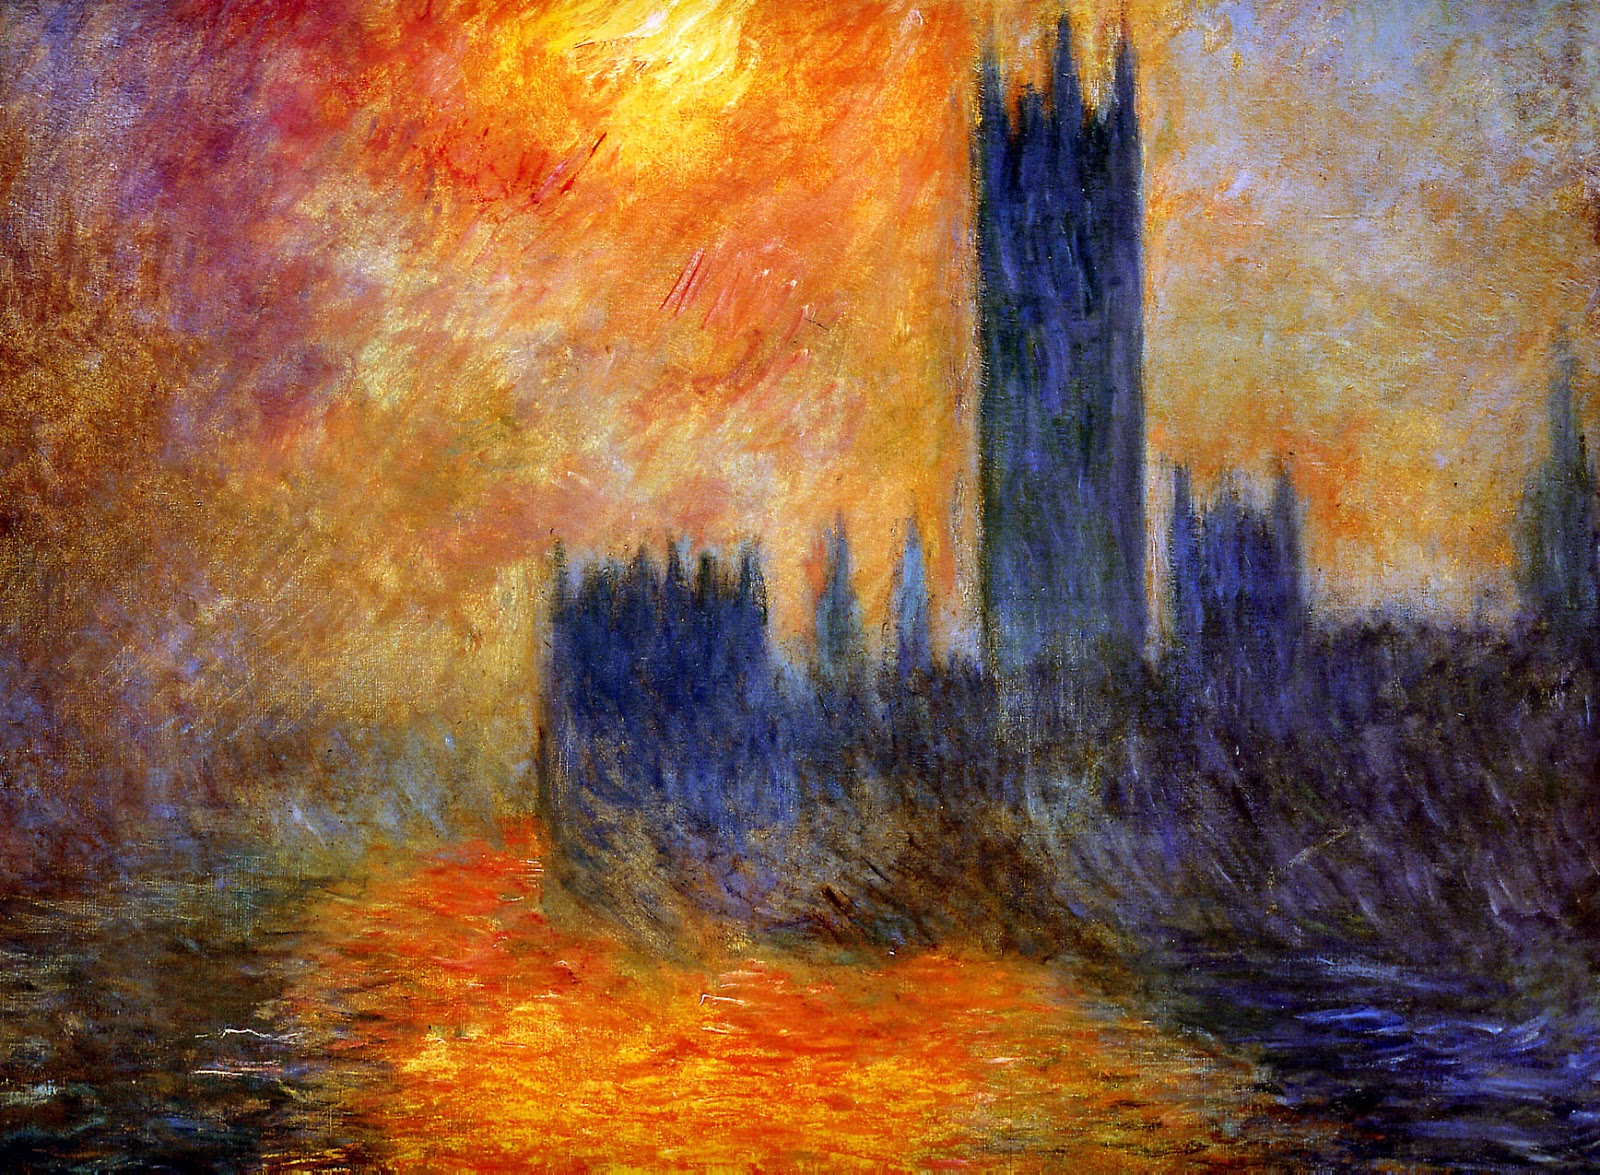 Claude+Monet-1840-1926 (300).jpg